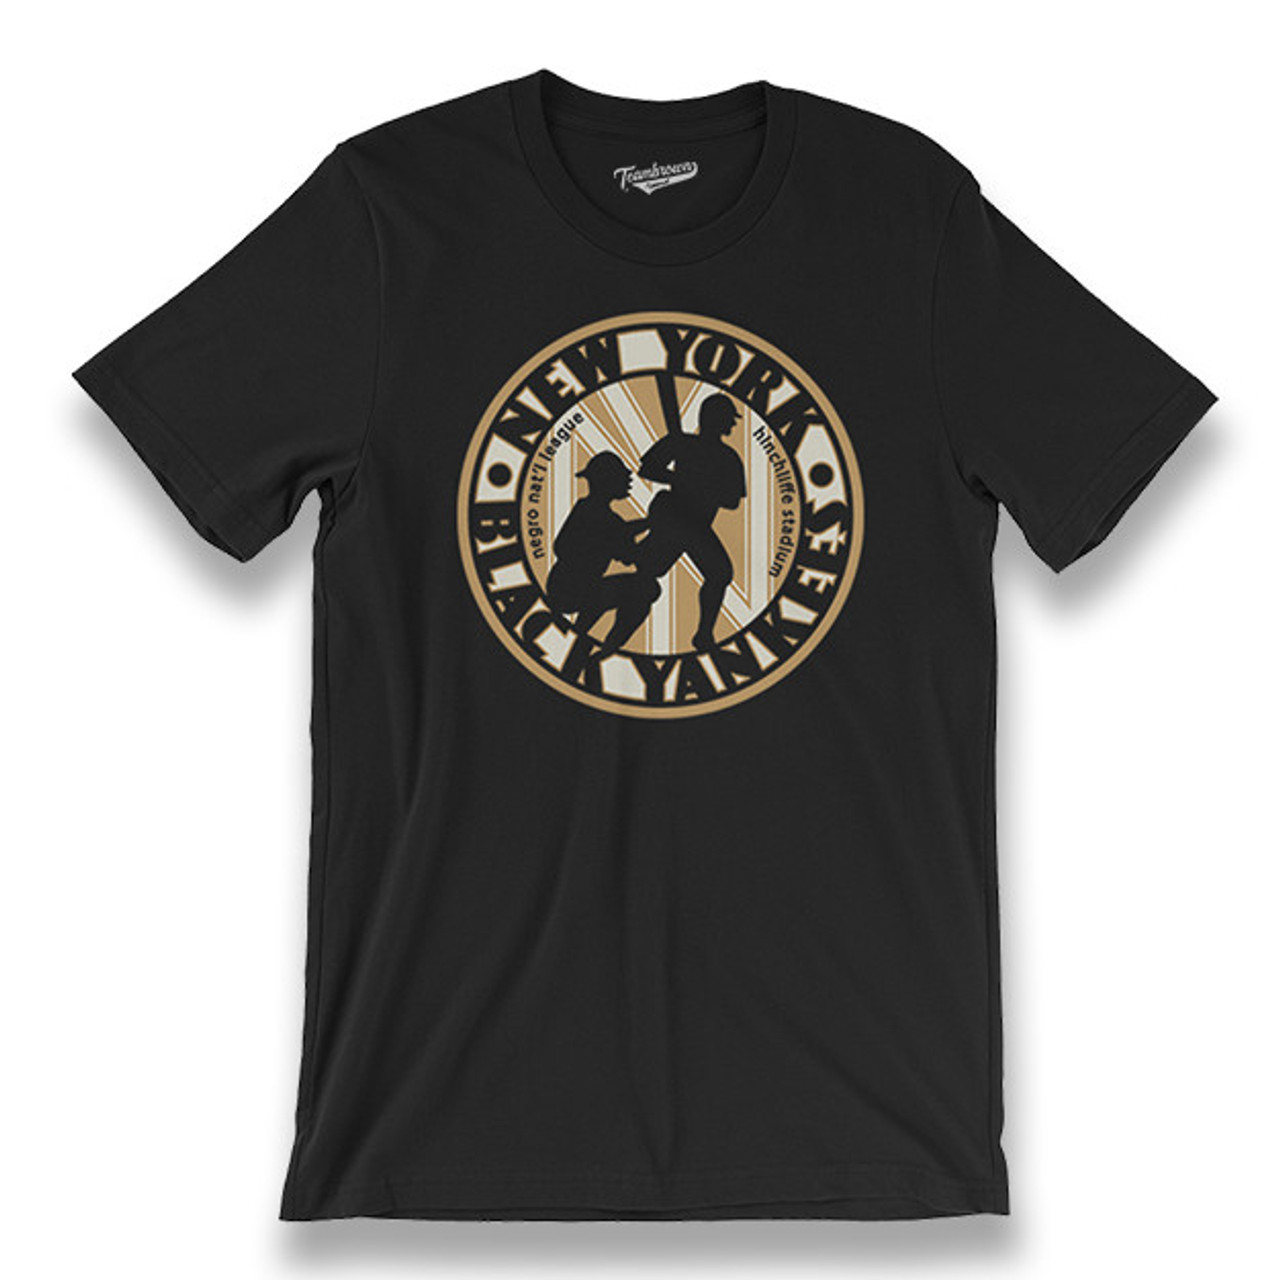 Men's Teambrown New York Black Yankees T-Shirt